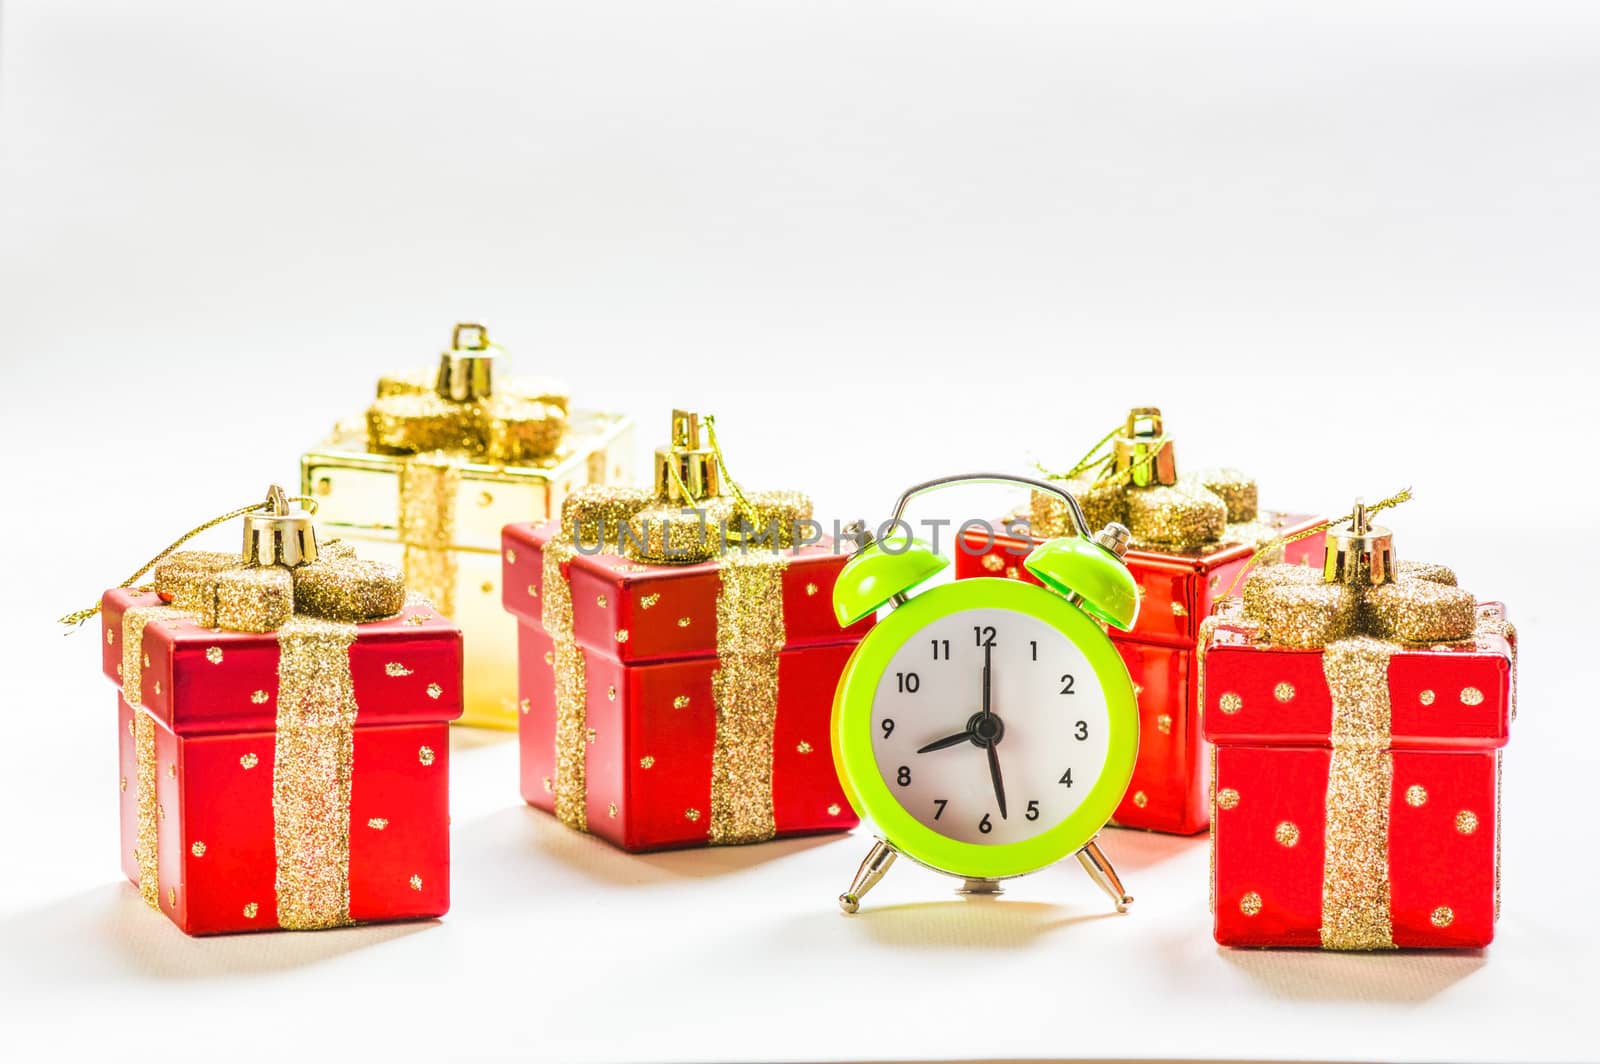 Green alarm clock between present shaped Christmas decorations